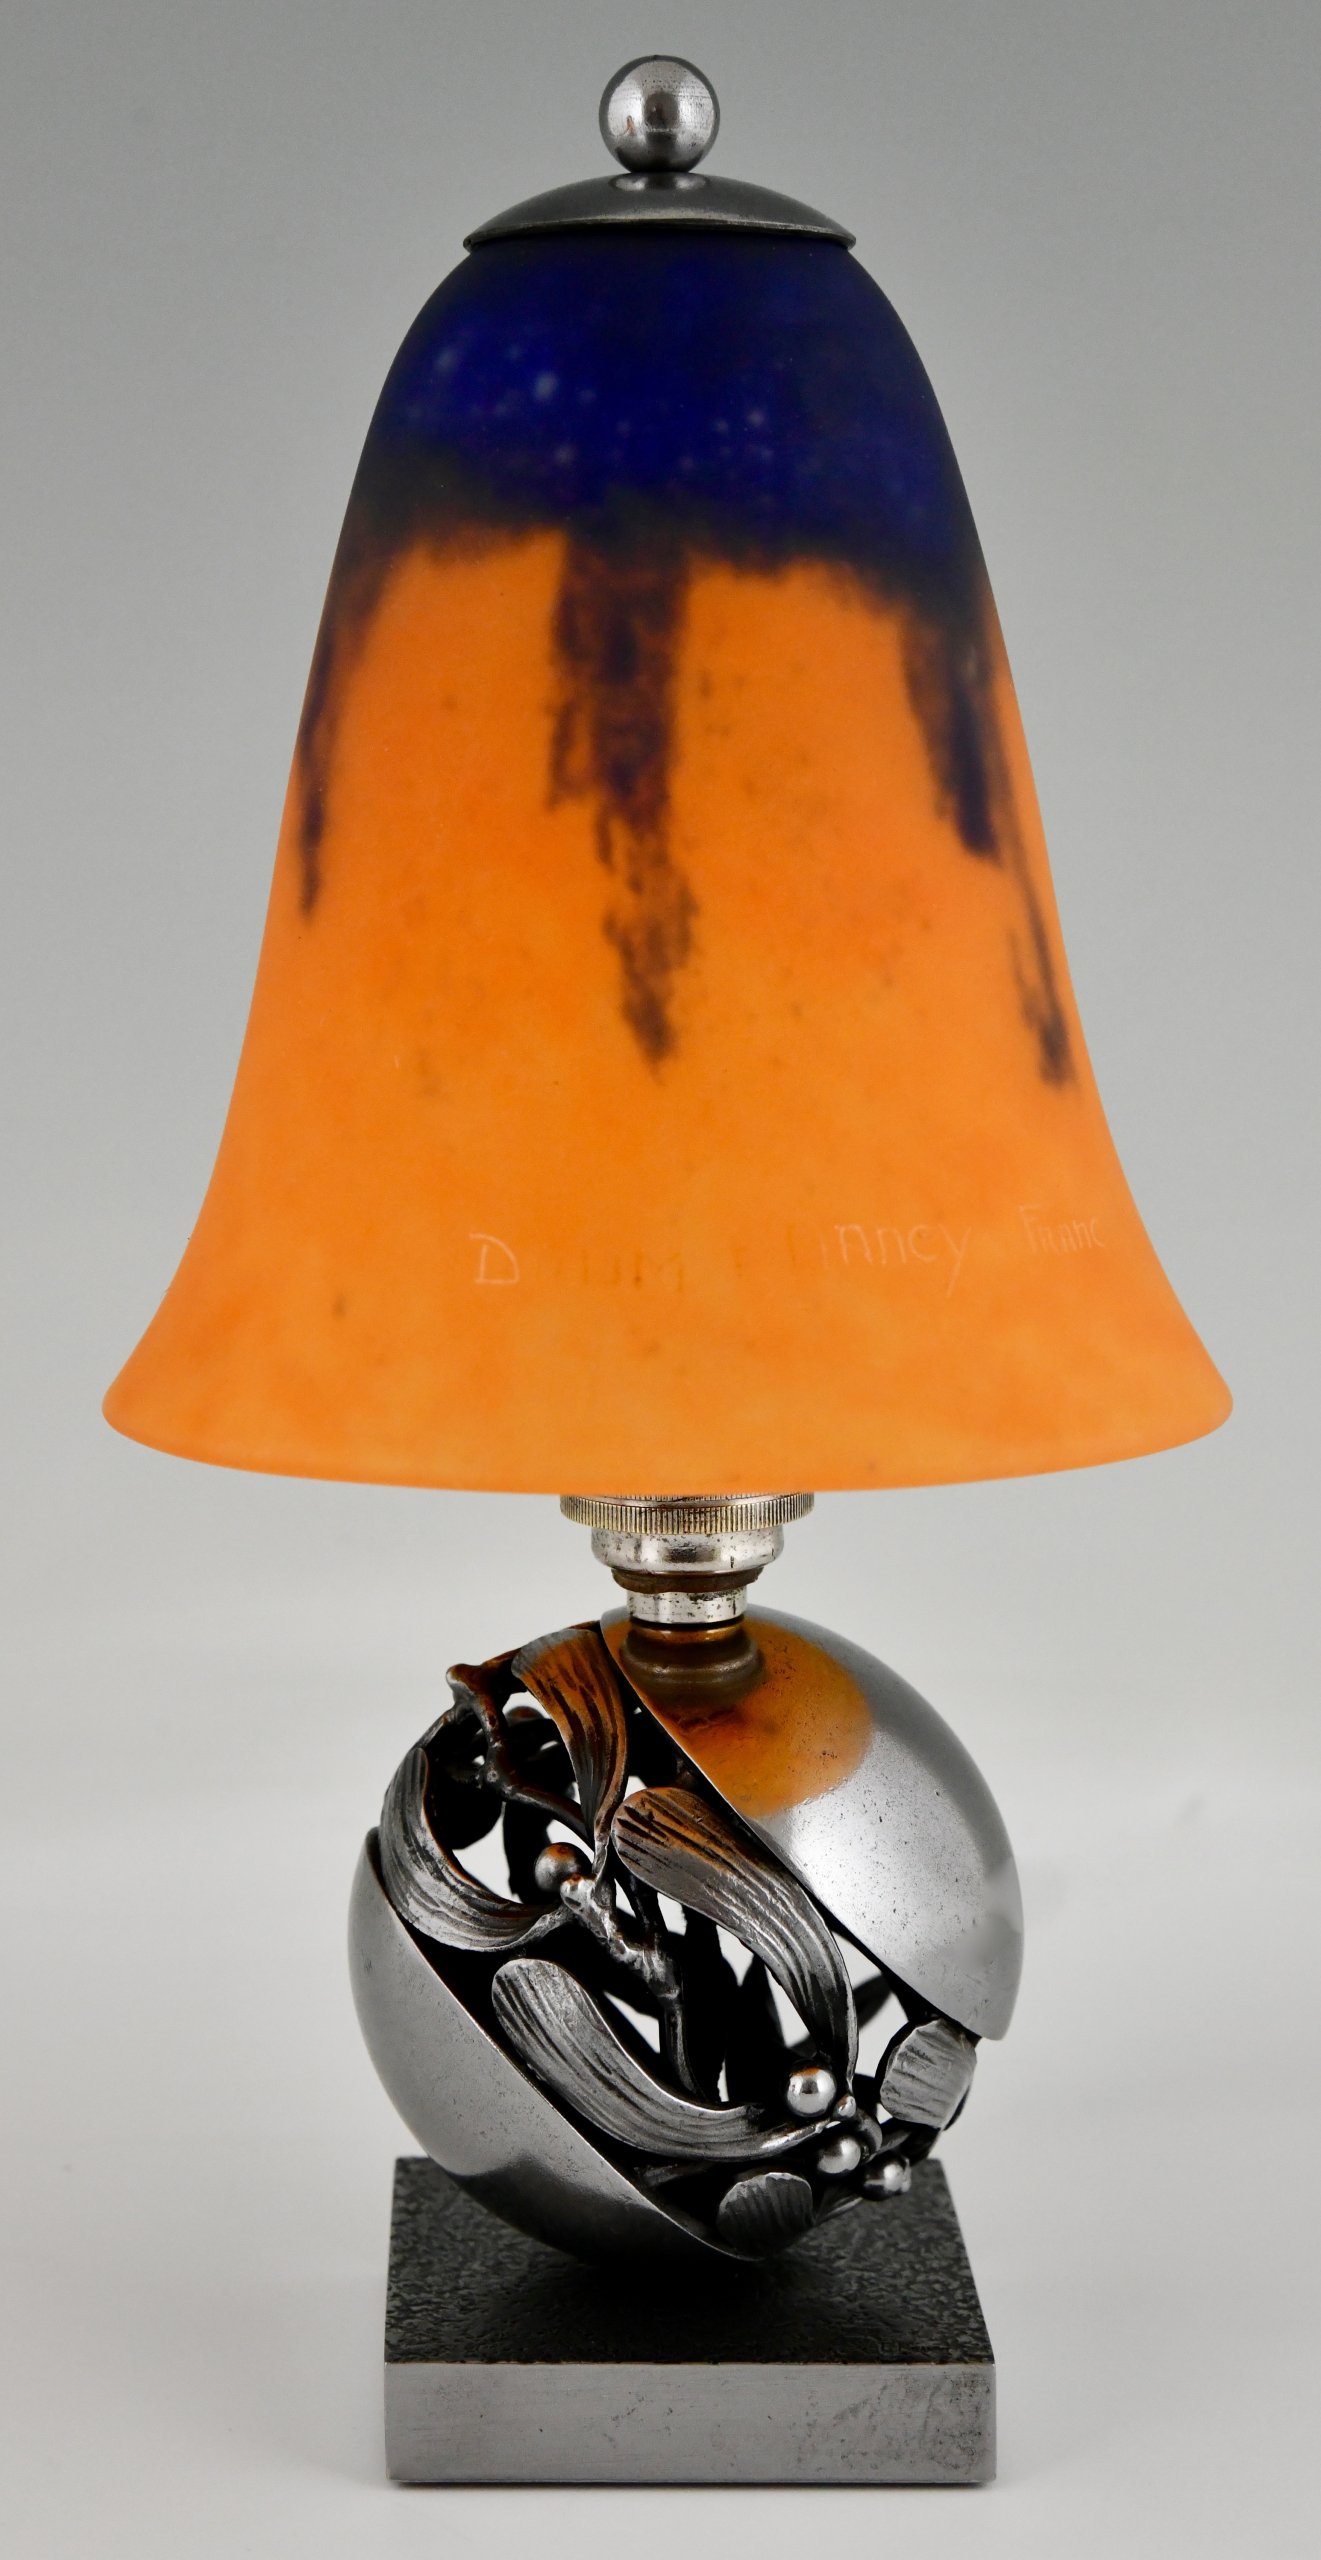 Pair of Mistletoe or Boule de Gui Art Deco table lamps